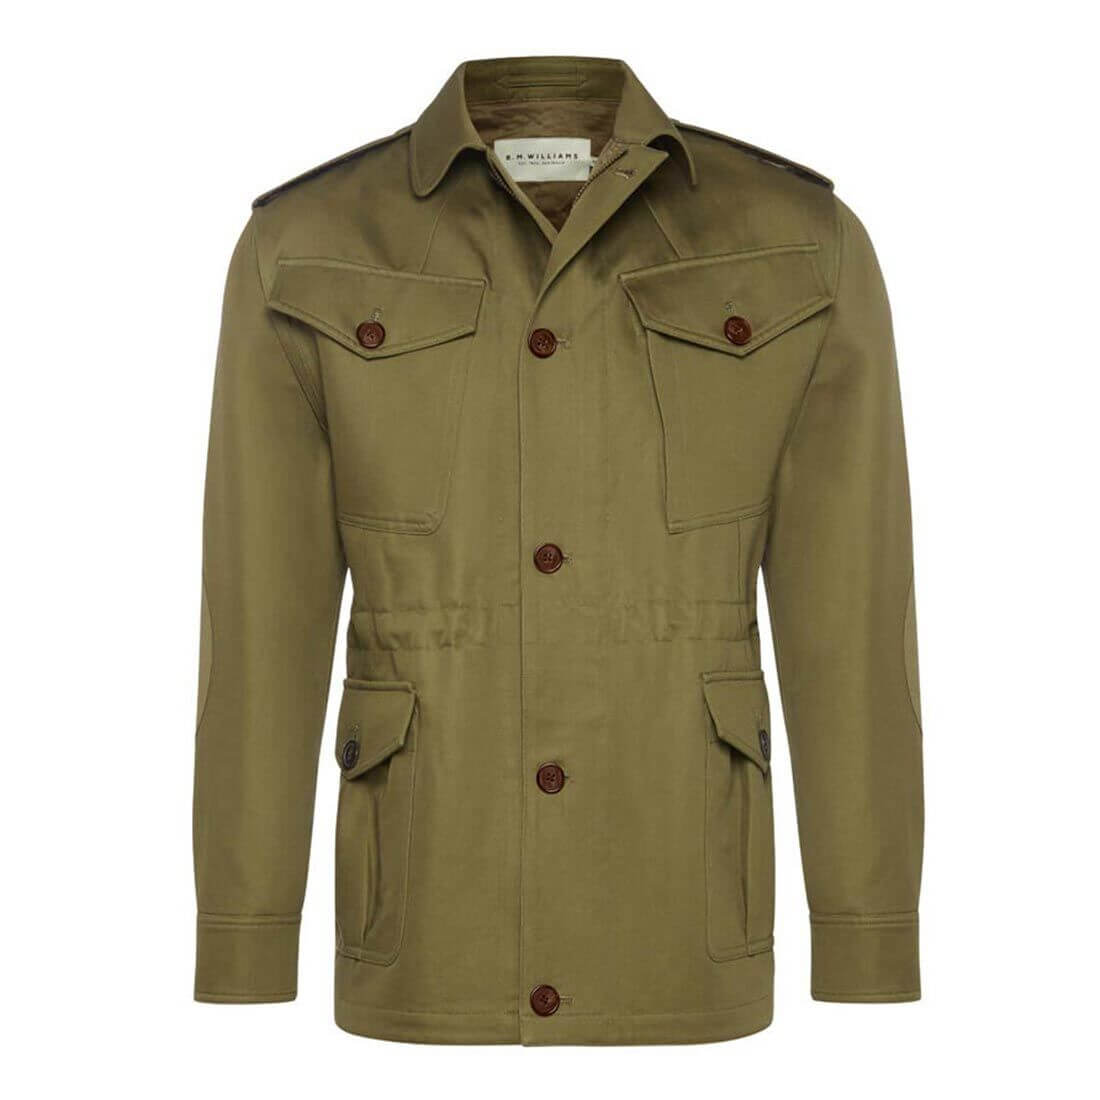 RM Williams 'Montgomery' Jacket - Olive | tommytwice.com